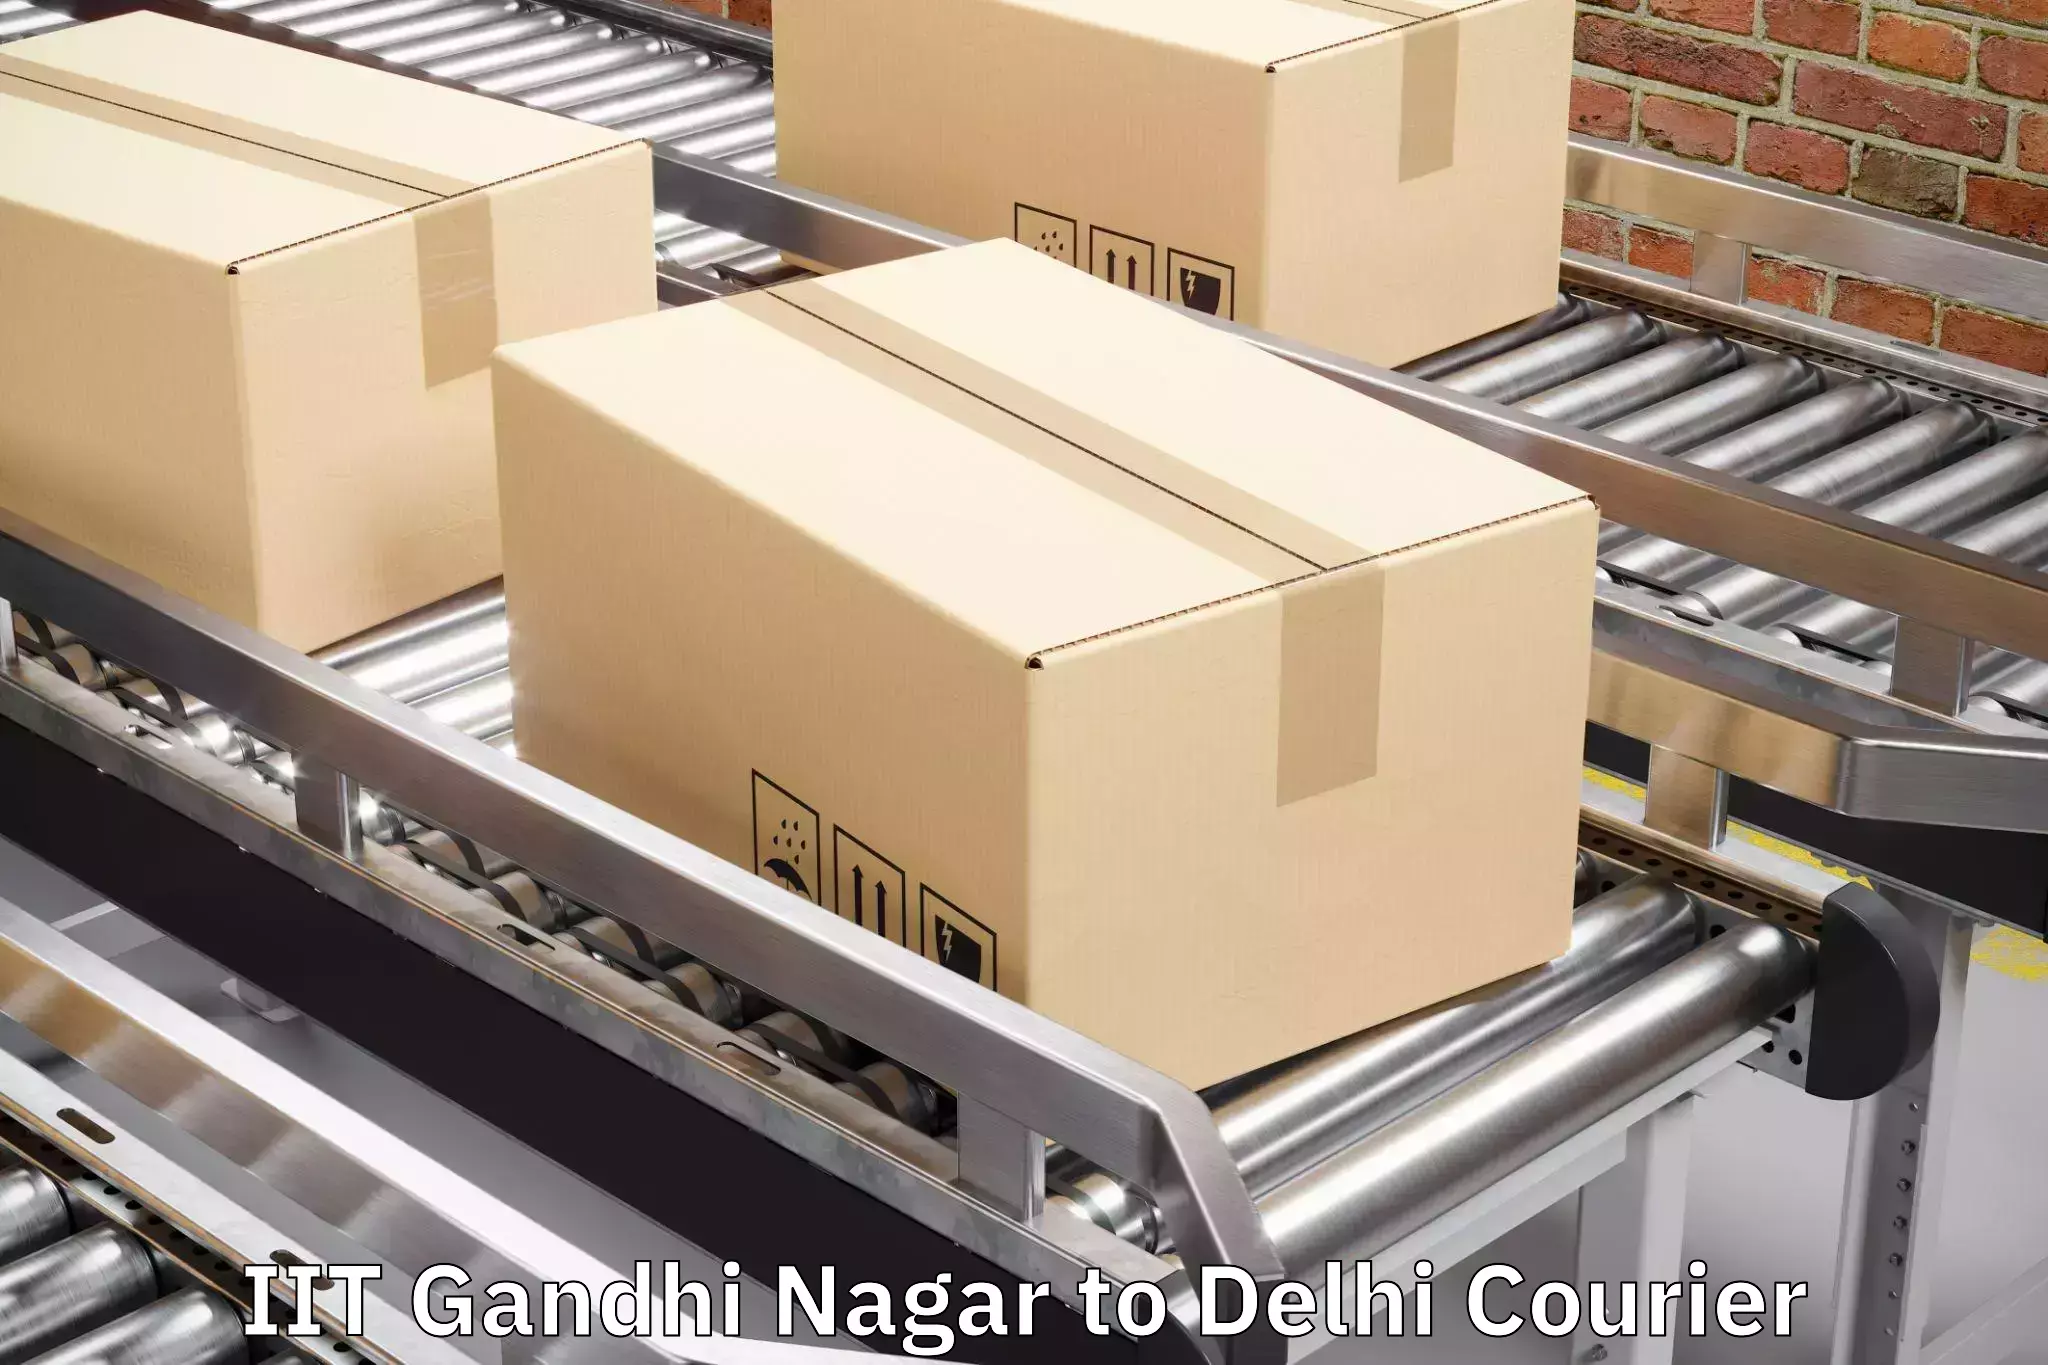 Baggage transport technology IIT Gandhi Nagar to Delhi